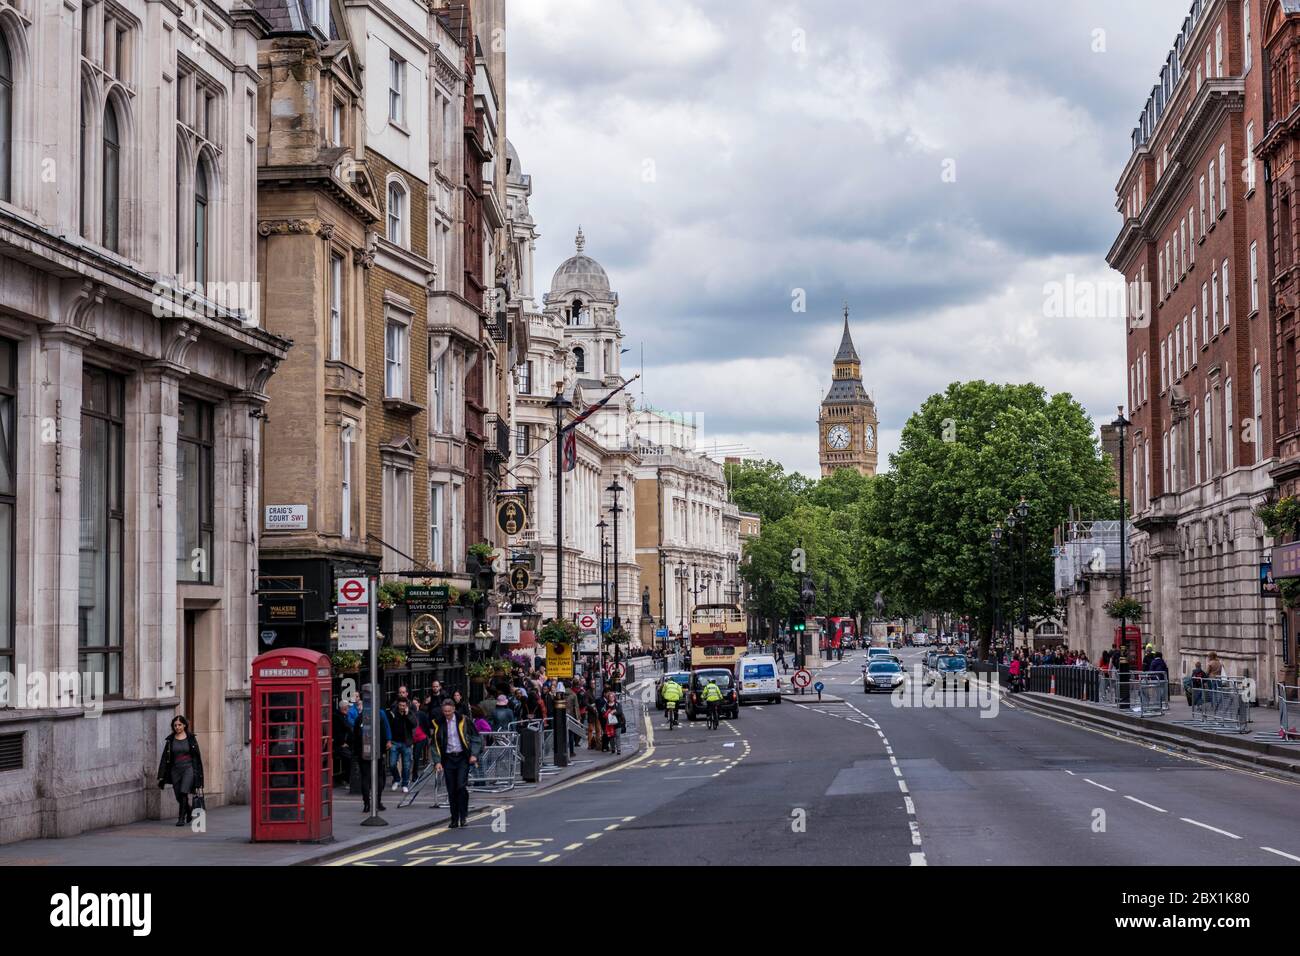 Street scene with Big Ben, London, England, Great Britain Stock Photo